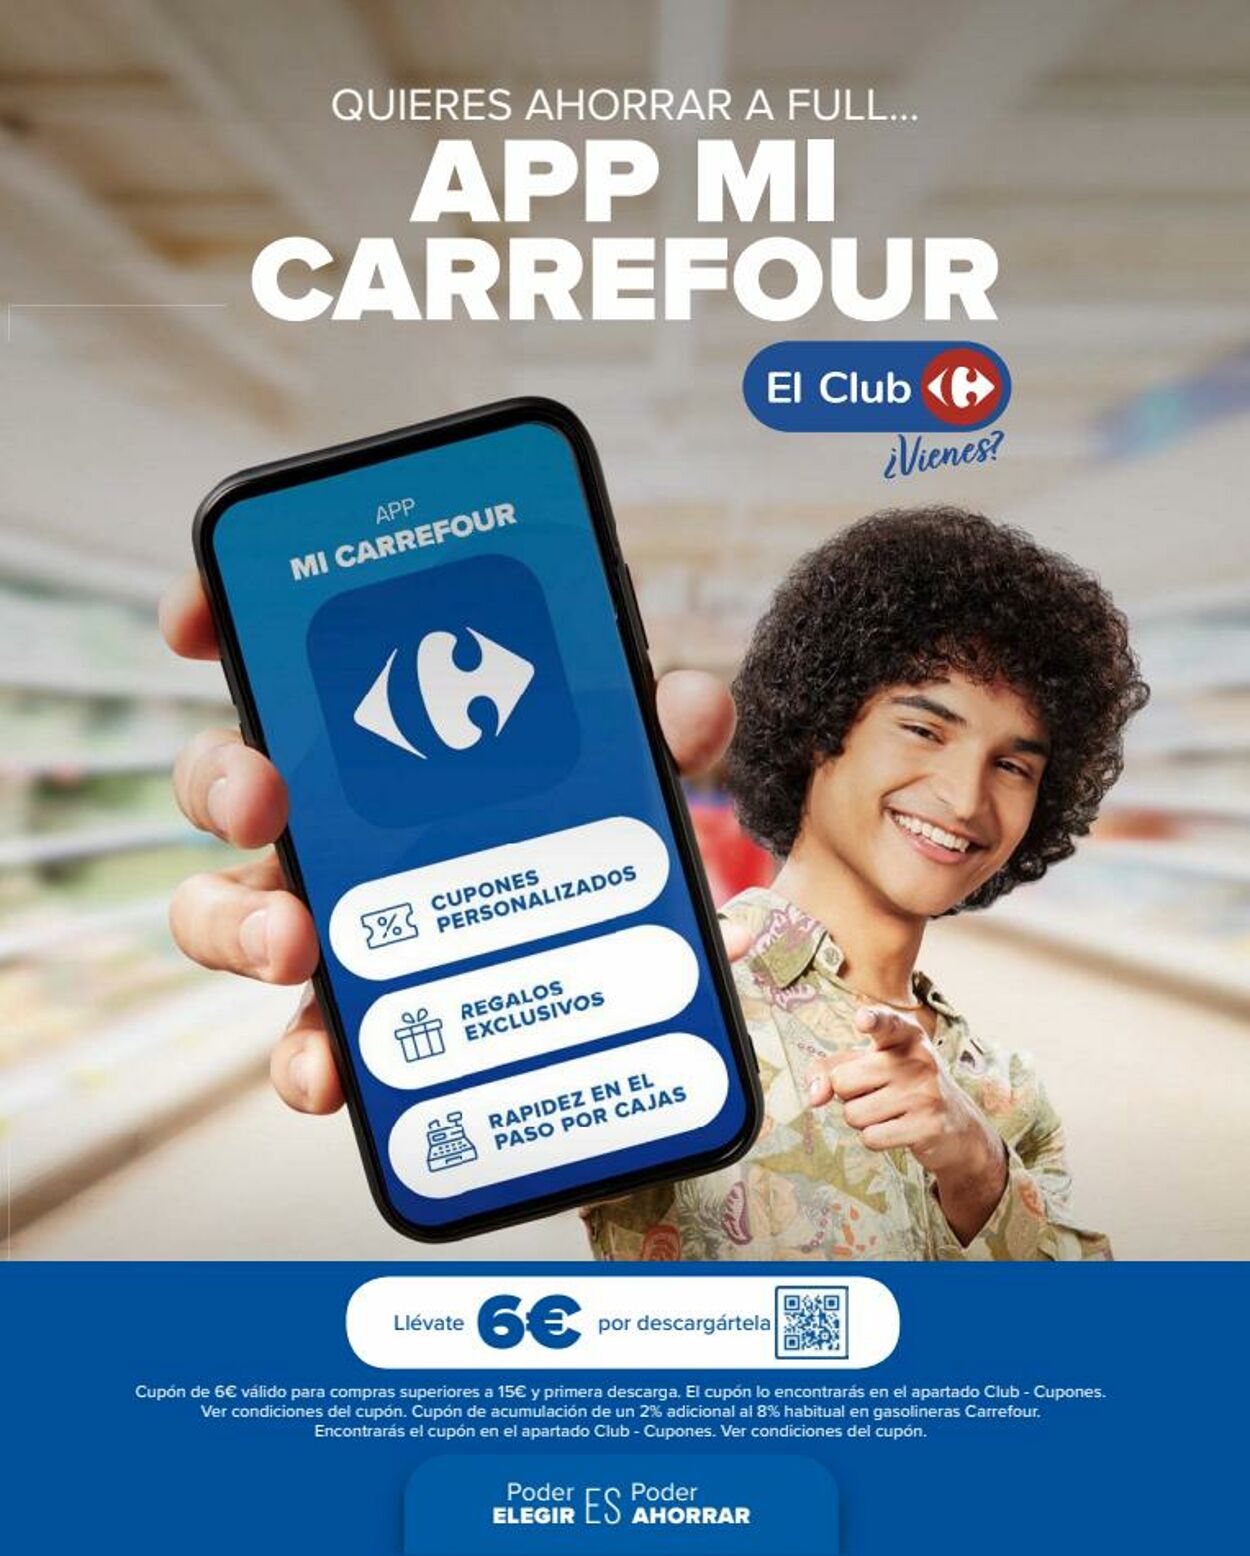 Carrefour Folleto desde 12.04.2023